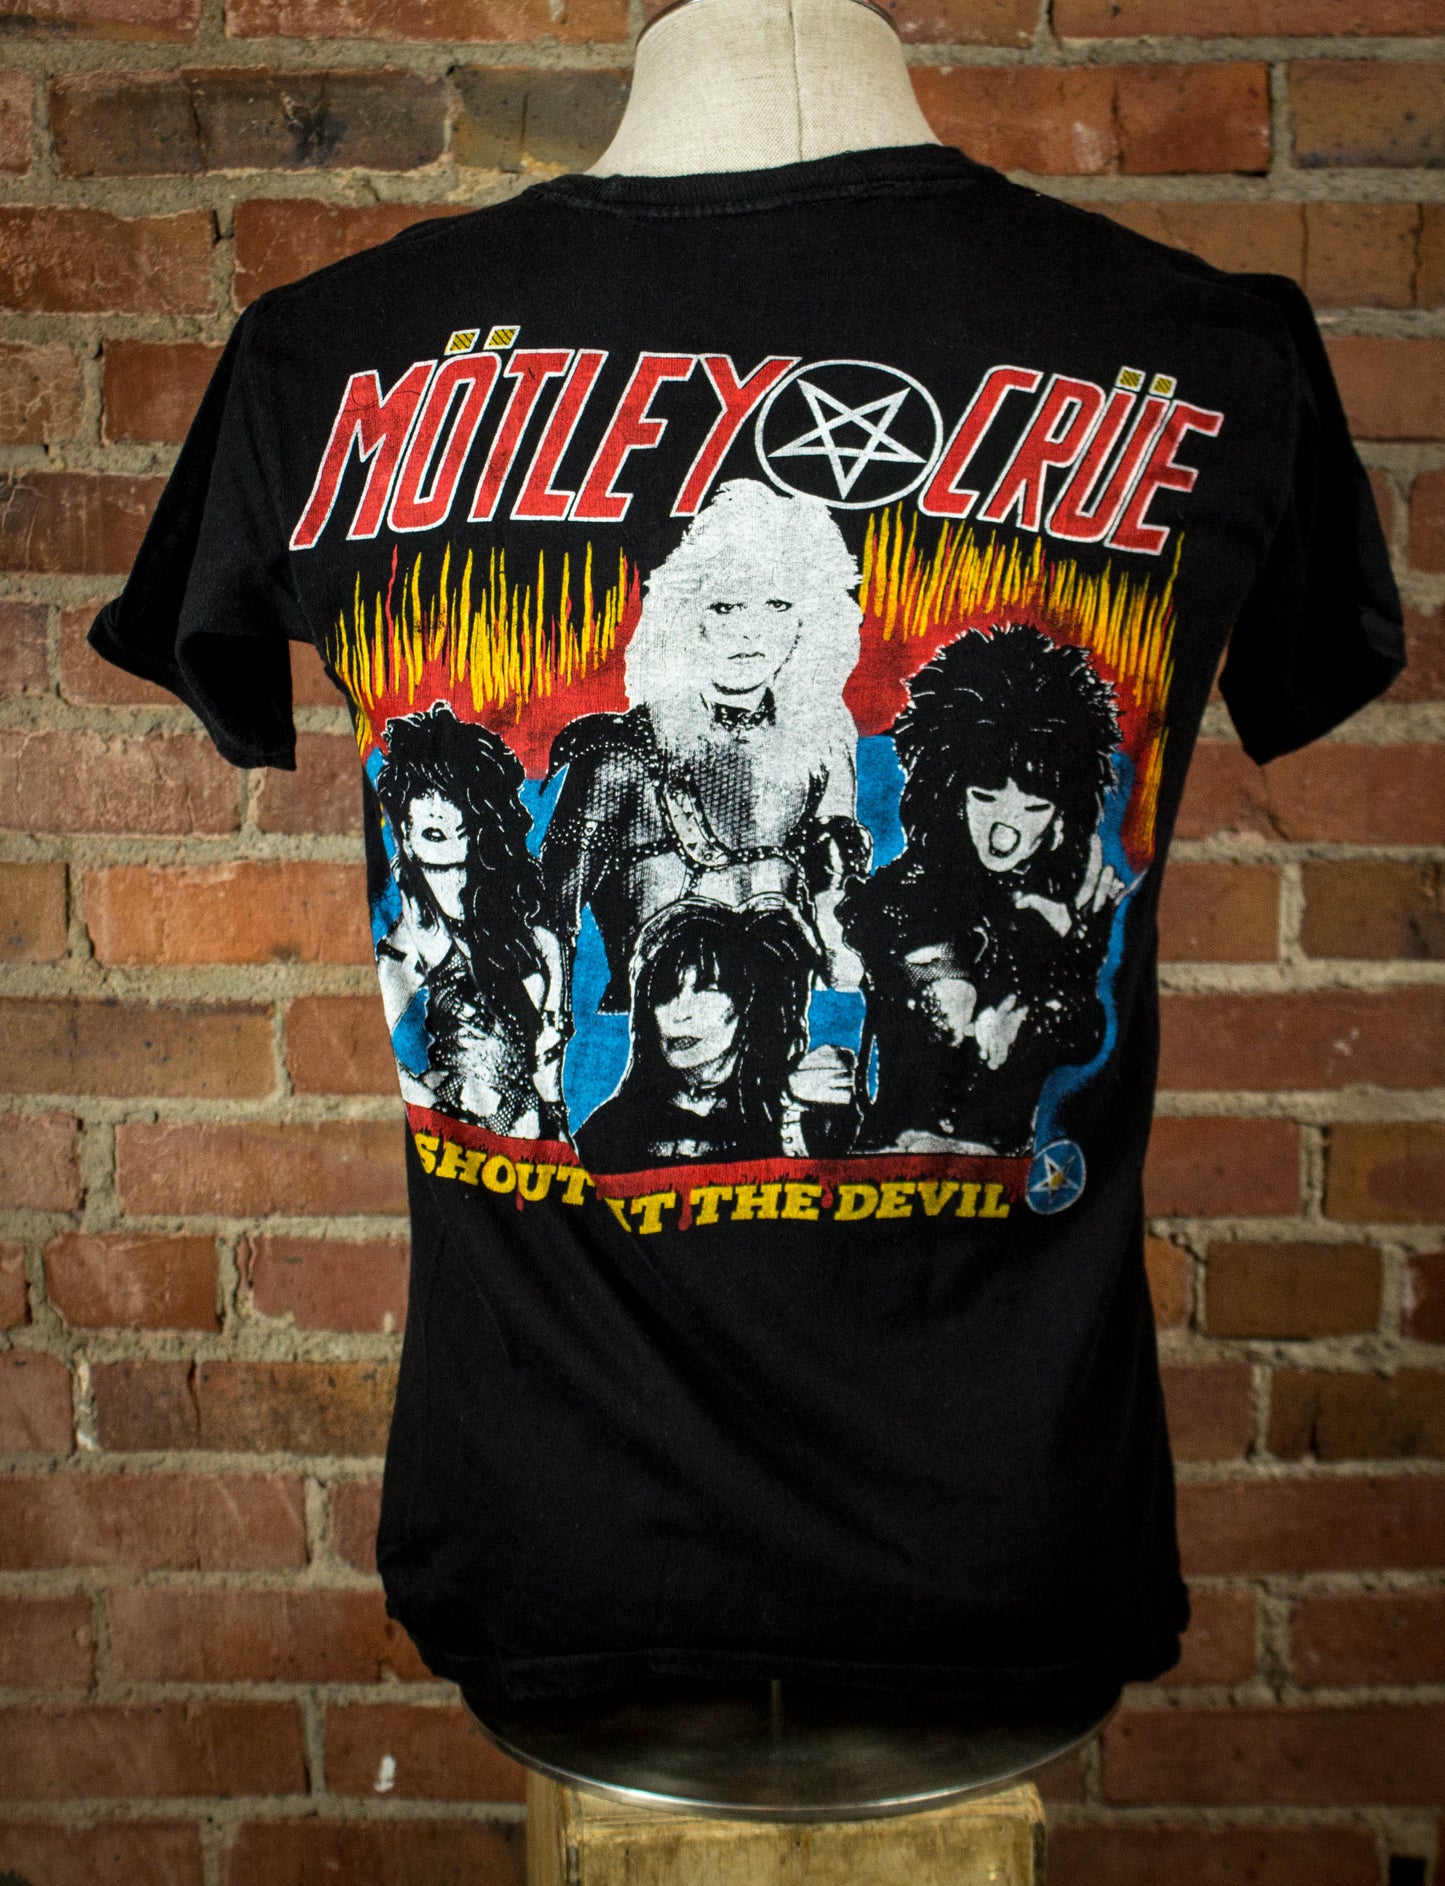 Vintage 1983 Motley Crue Skull Graphic Bootleg Concert T Shirt M/L